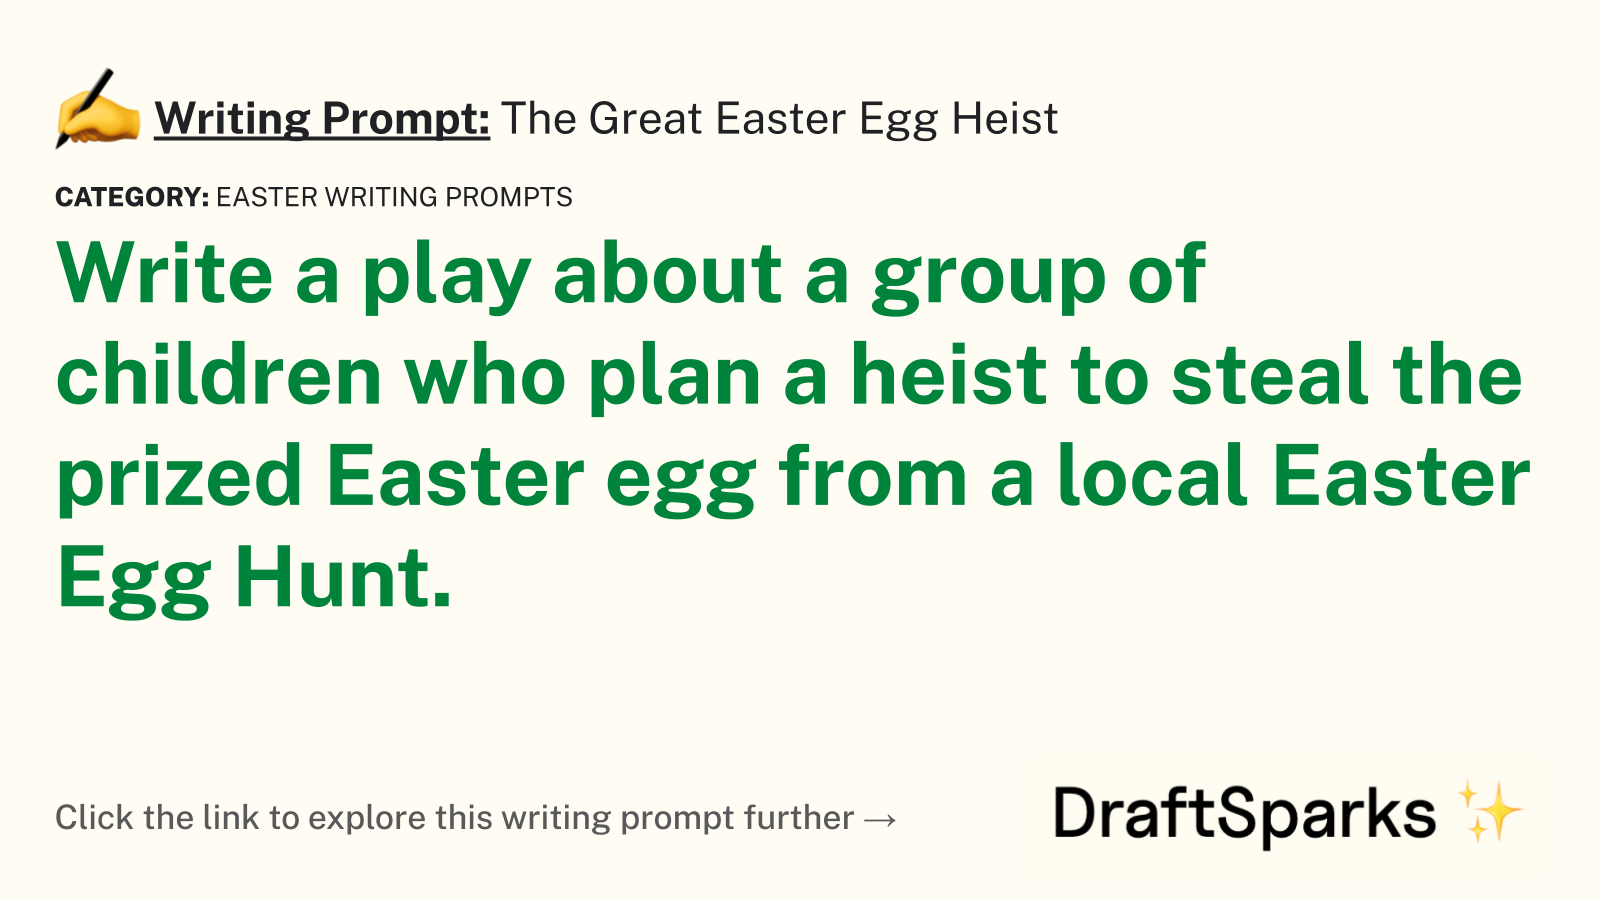 The Great Easter Egg Heist